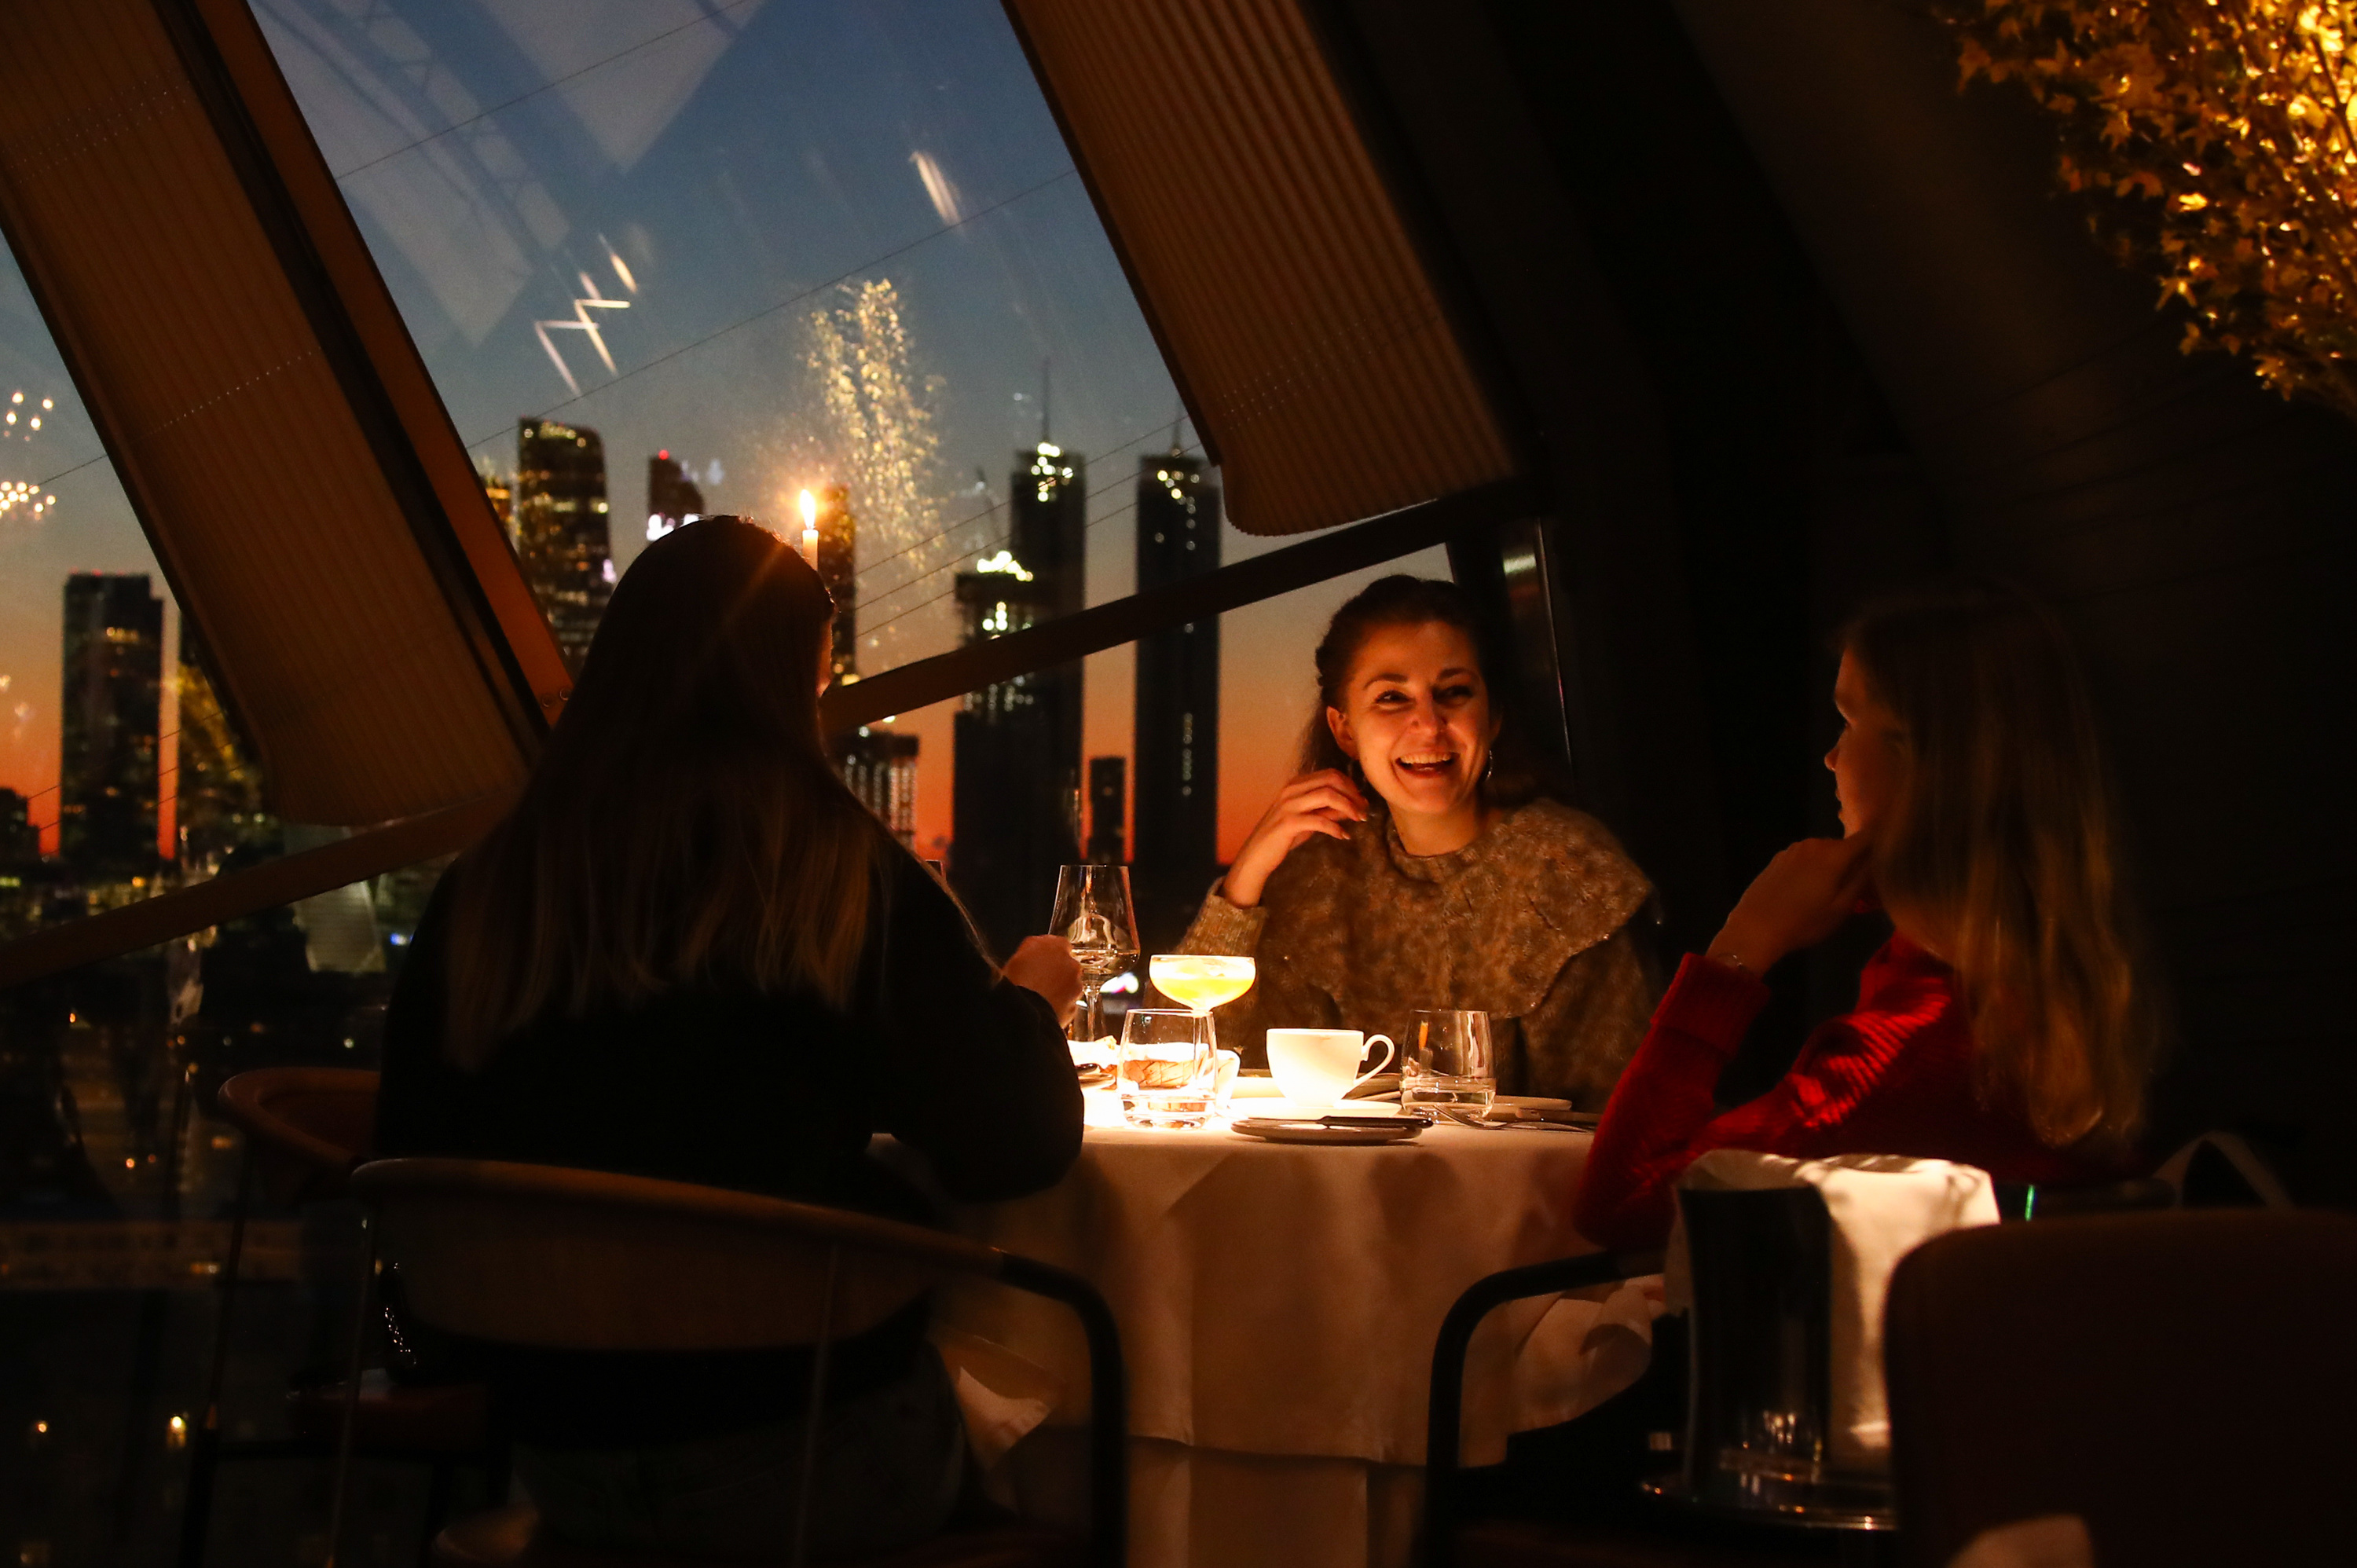 Three women sit at a table in a dark restaurant